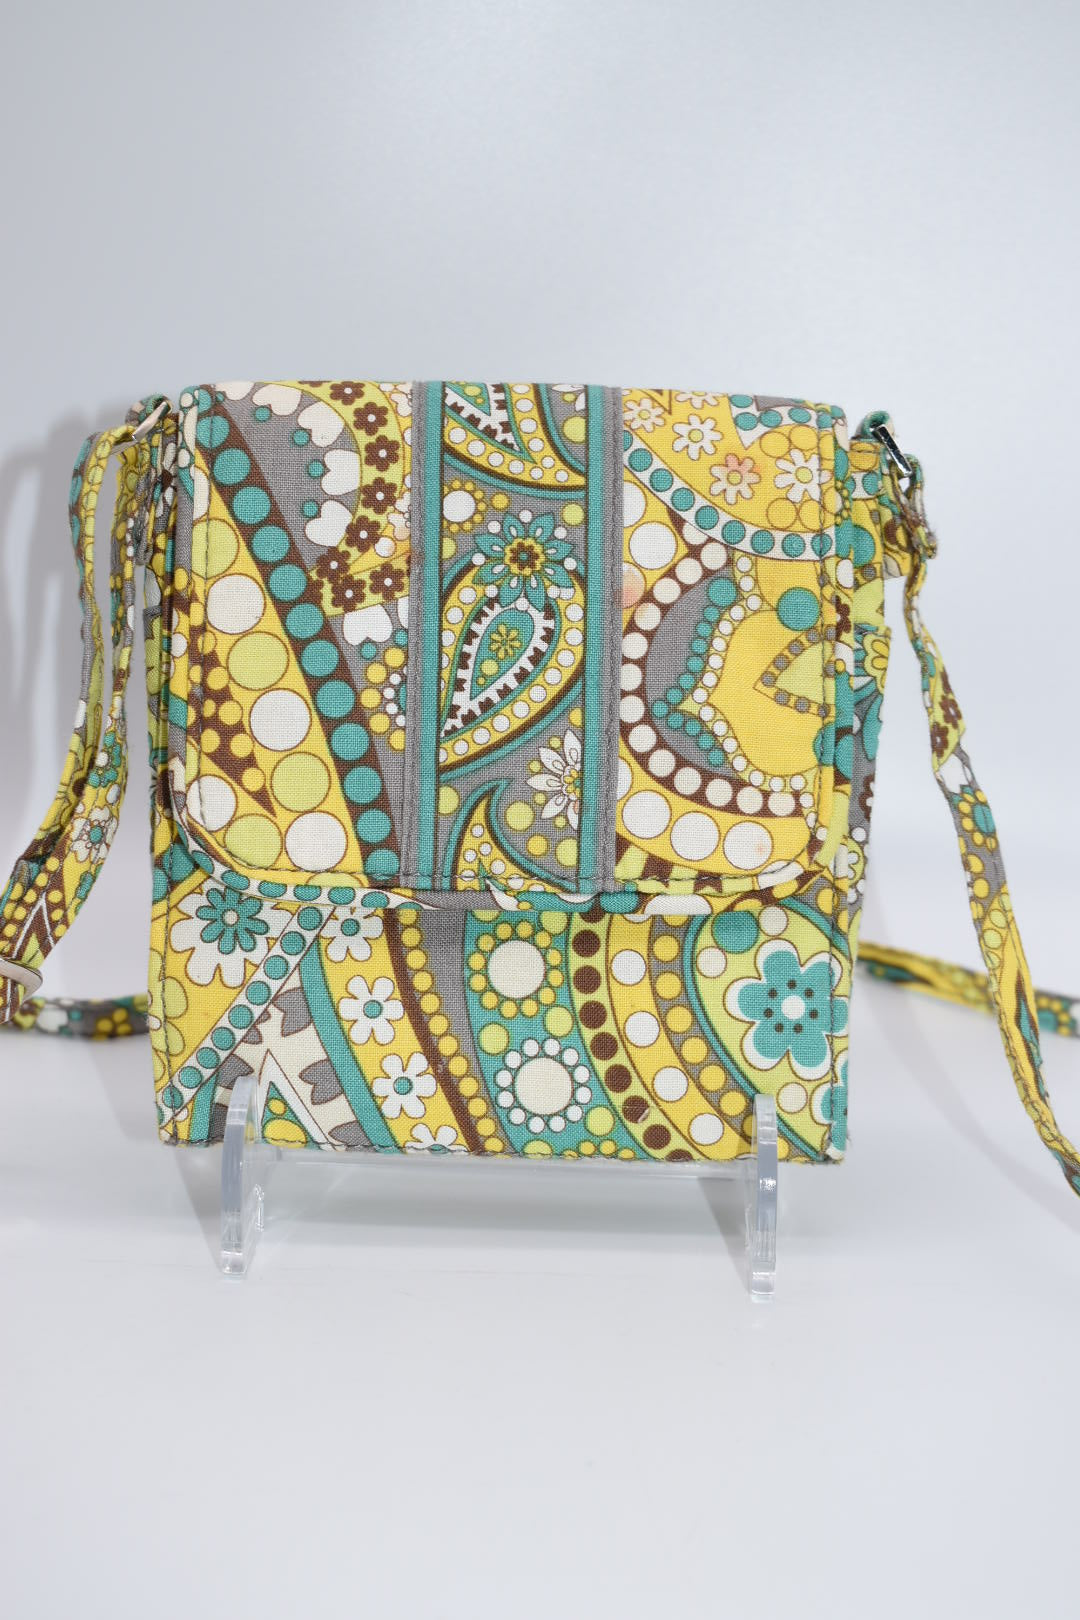 Rare Vera Bradley Mini Crossbody Bag in "Lemon Parfait" Pattern